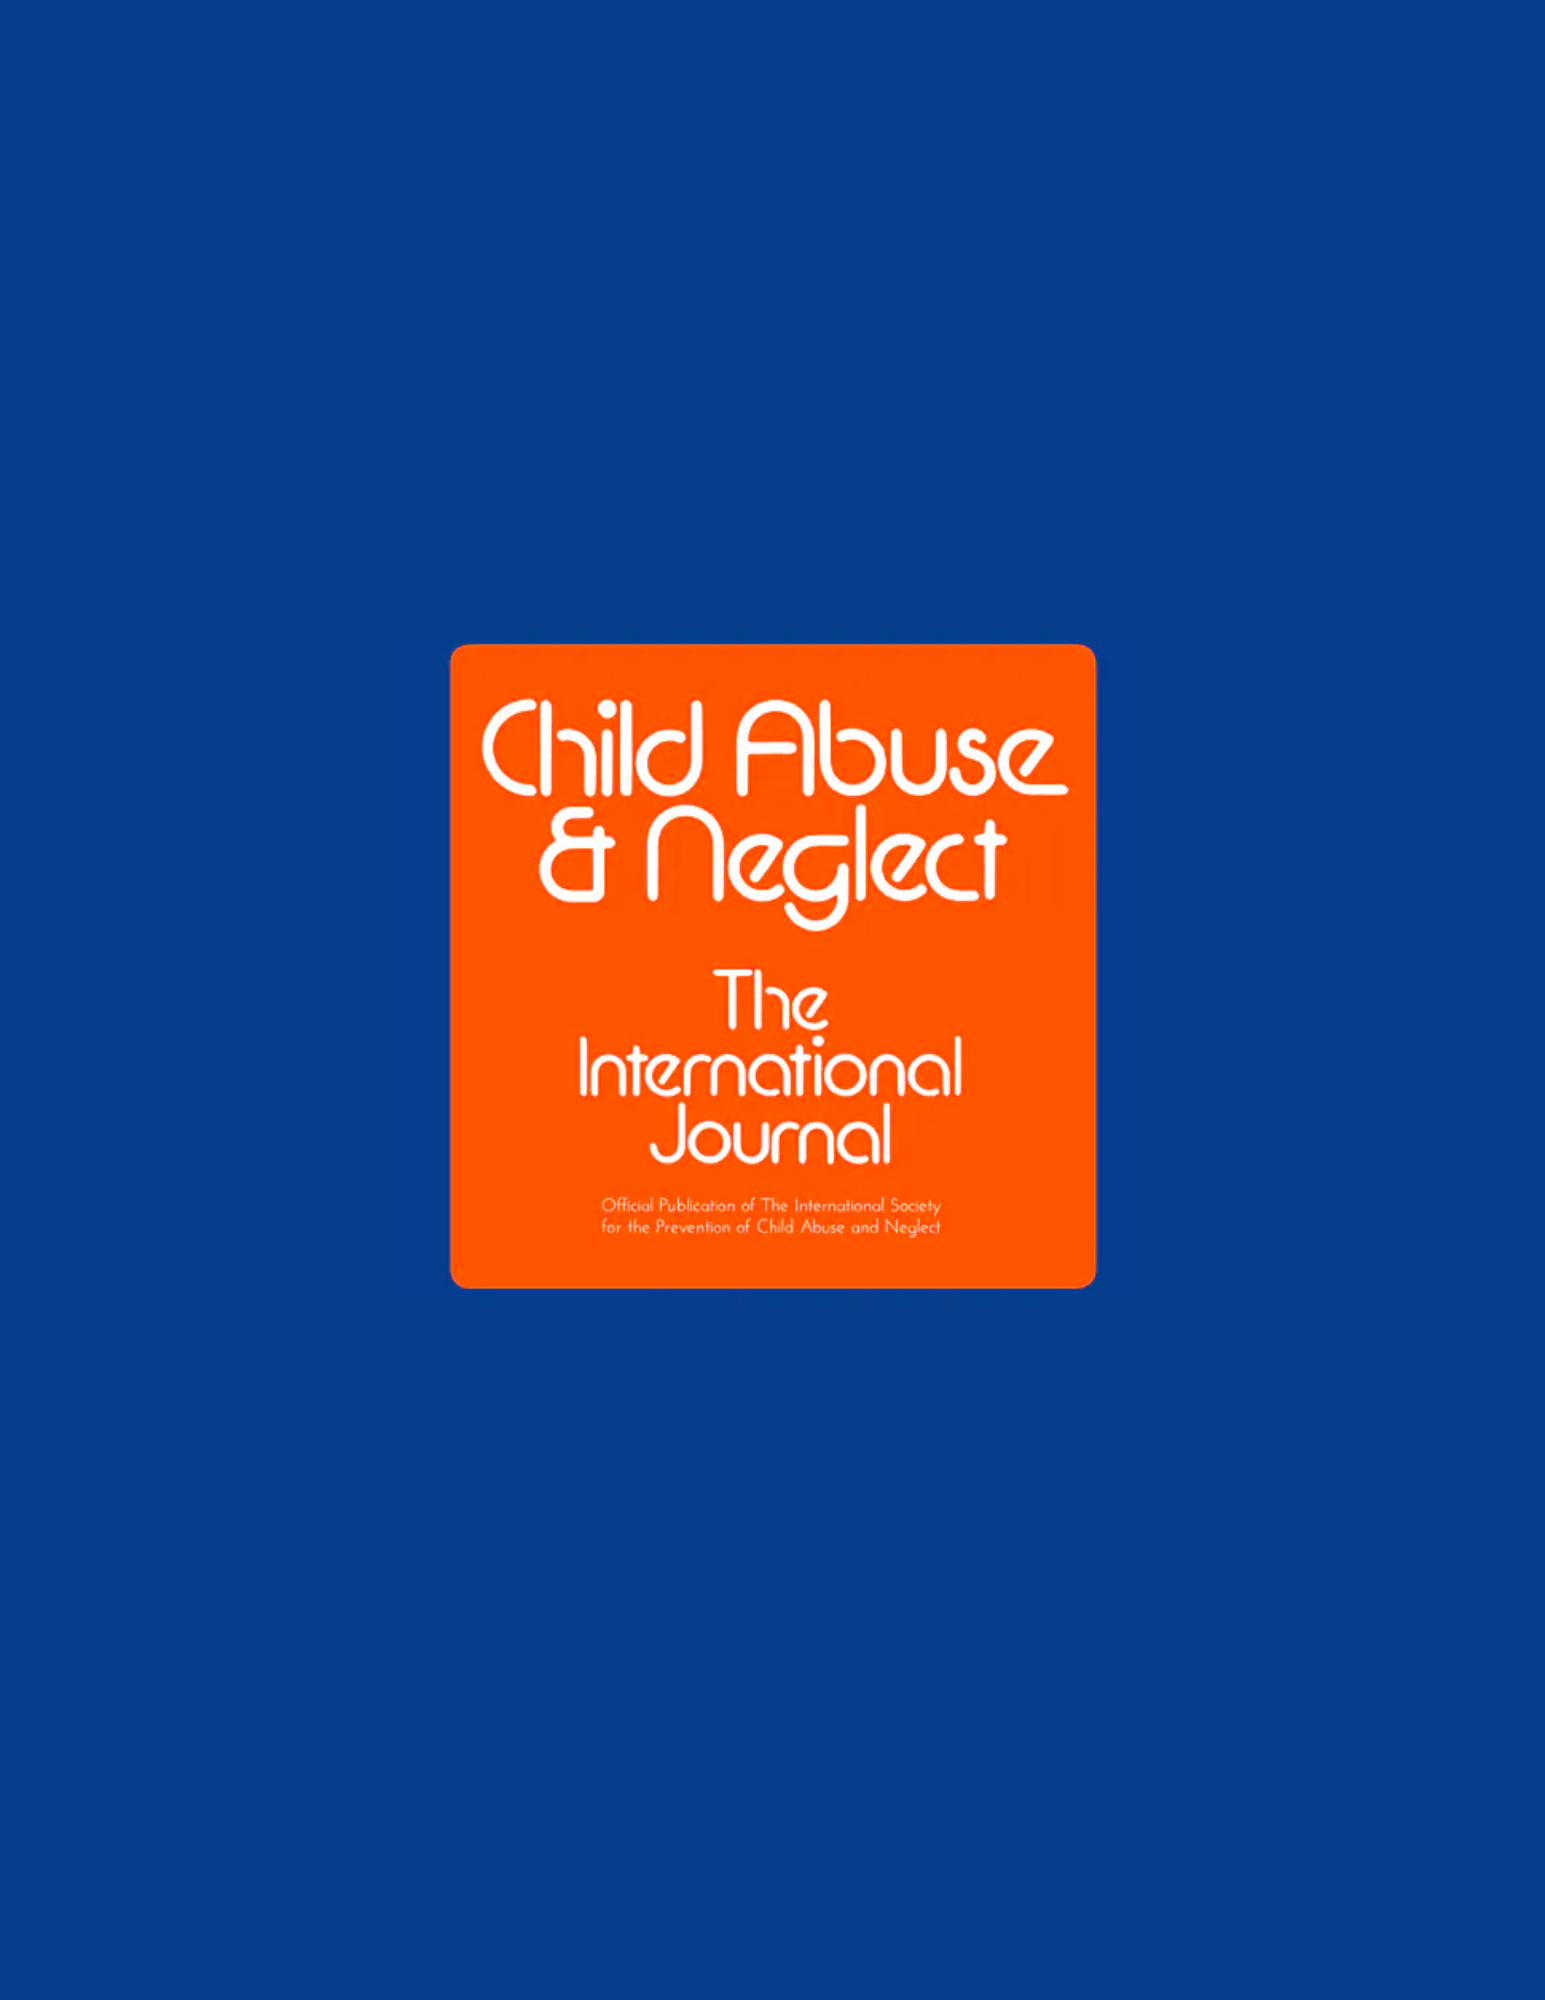 Child abuse neglect journal